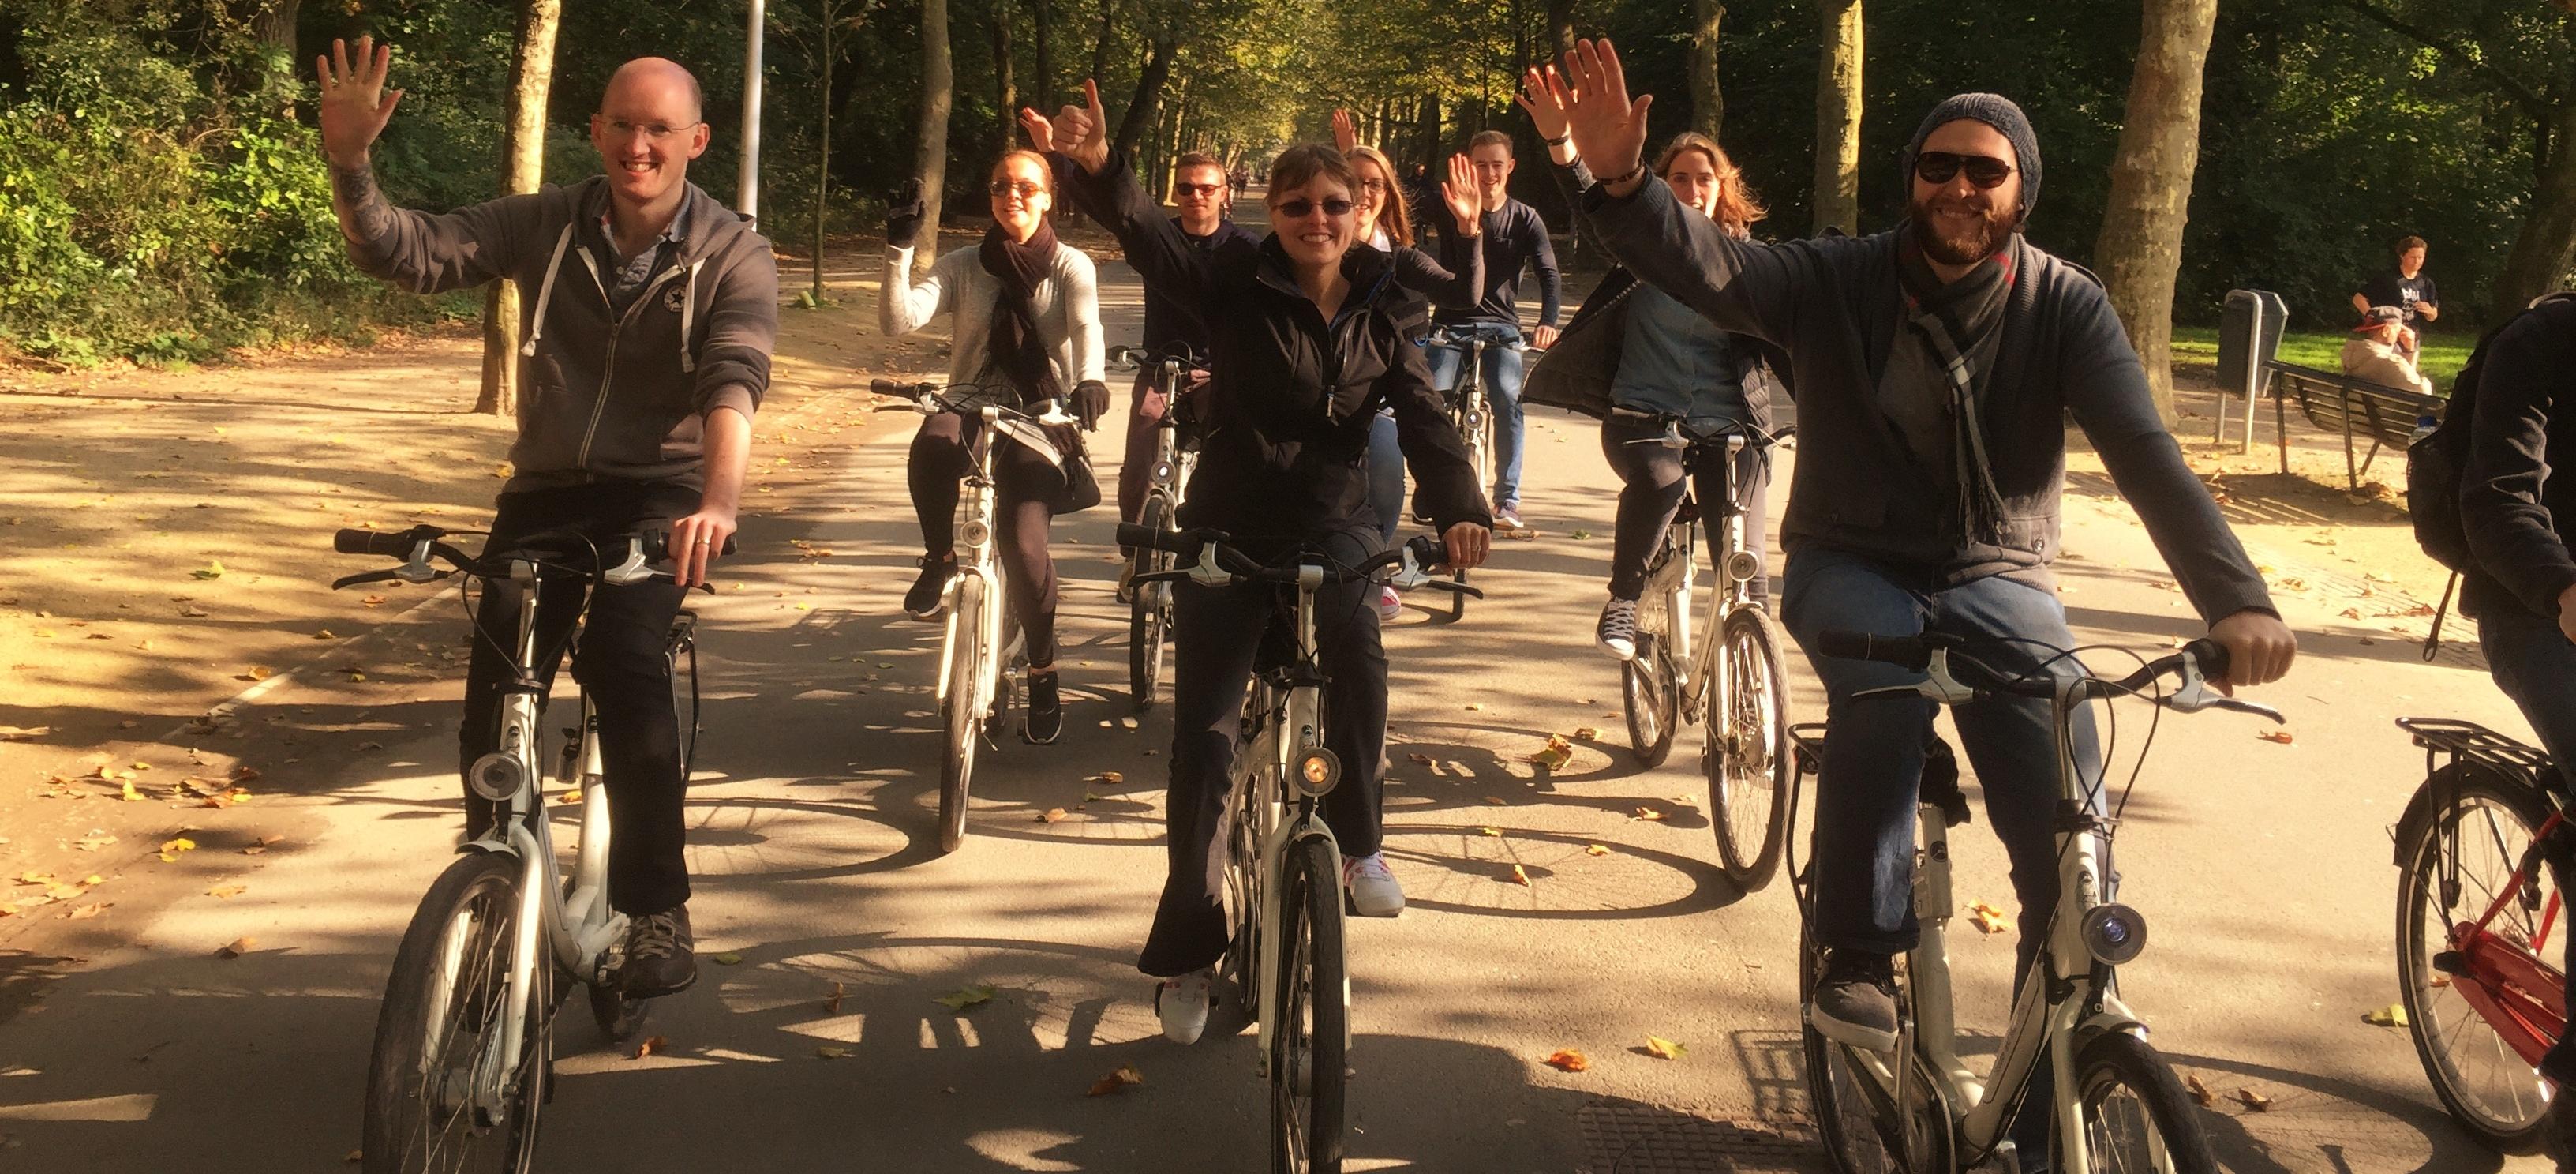 We Bike Amsterdam - обзорная экскурсия на велосипедах